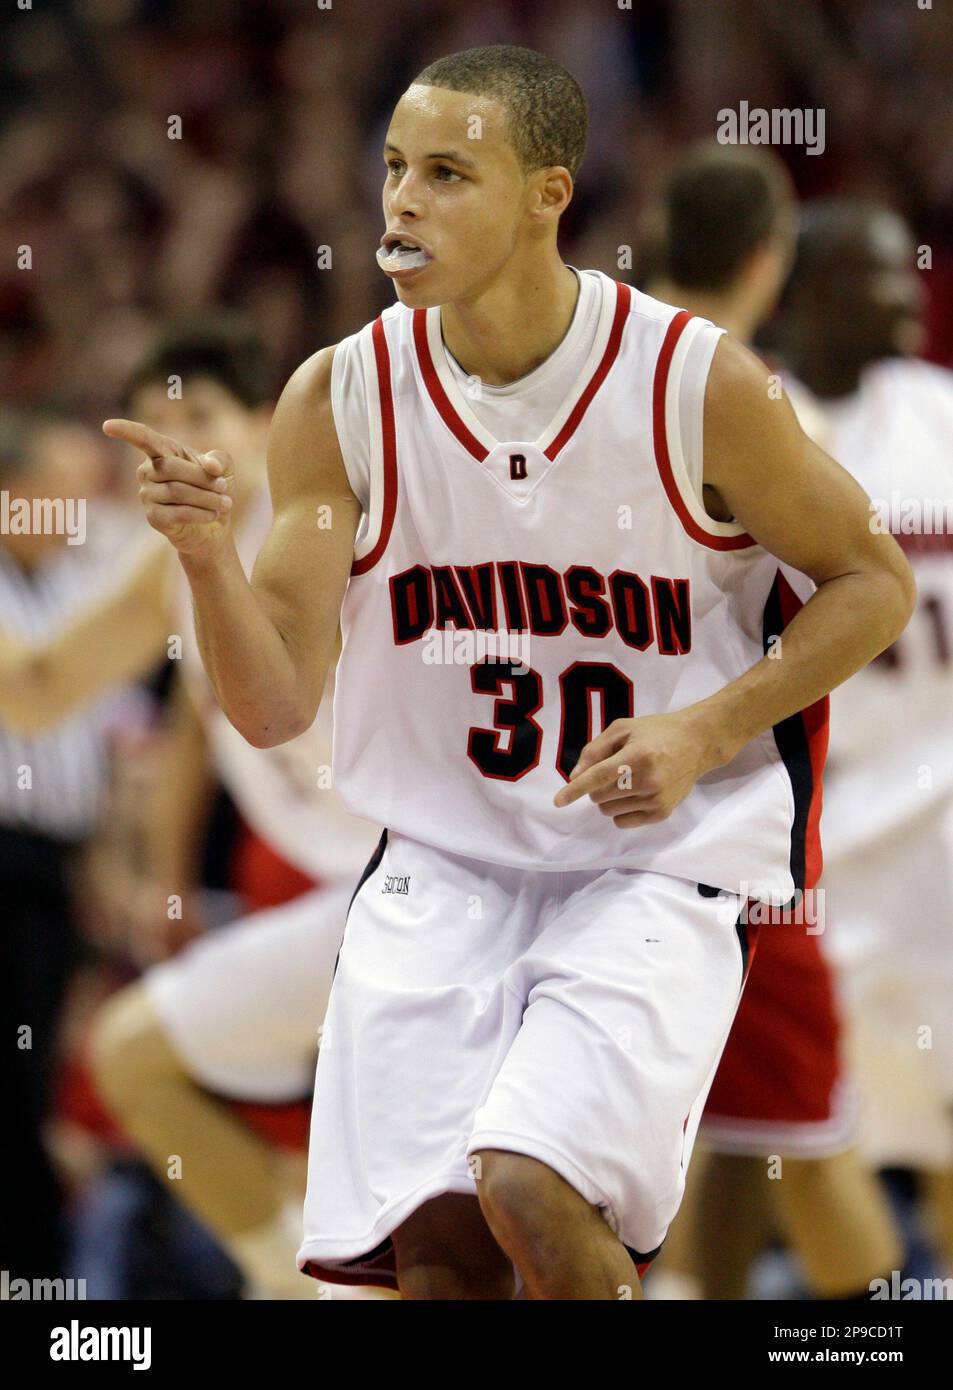 Davidson's Stephen Curry (30) points upward after scoring a basket